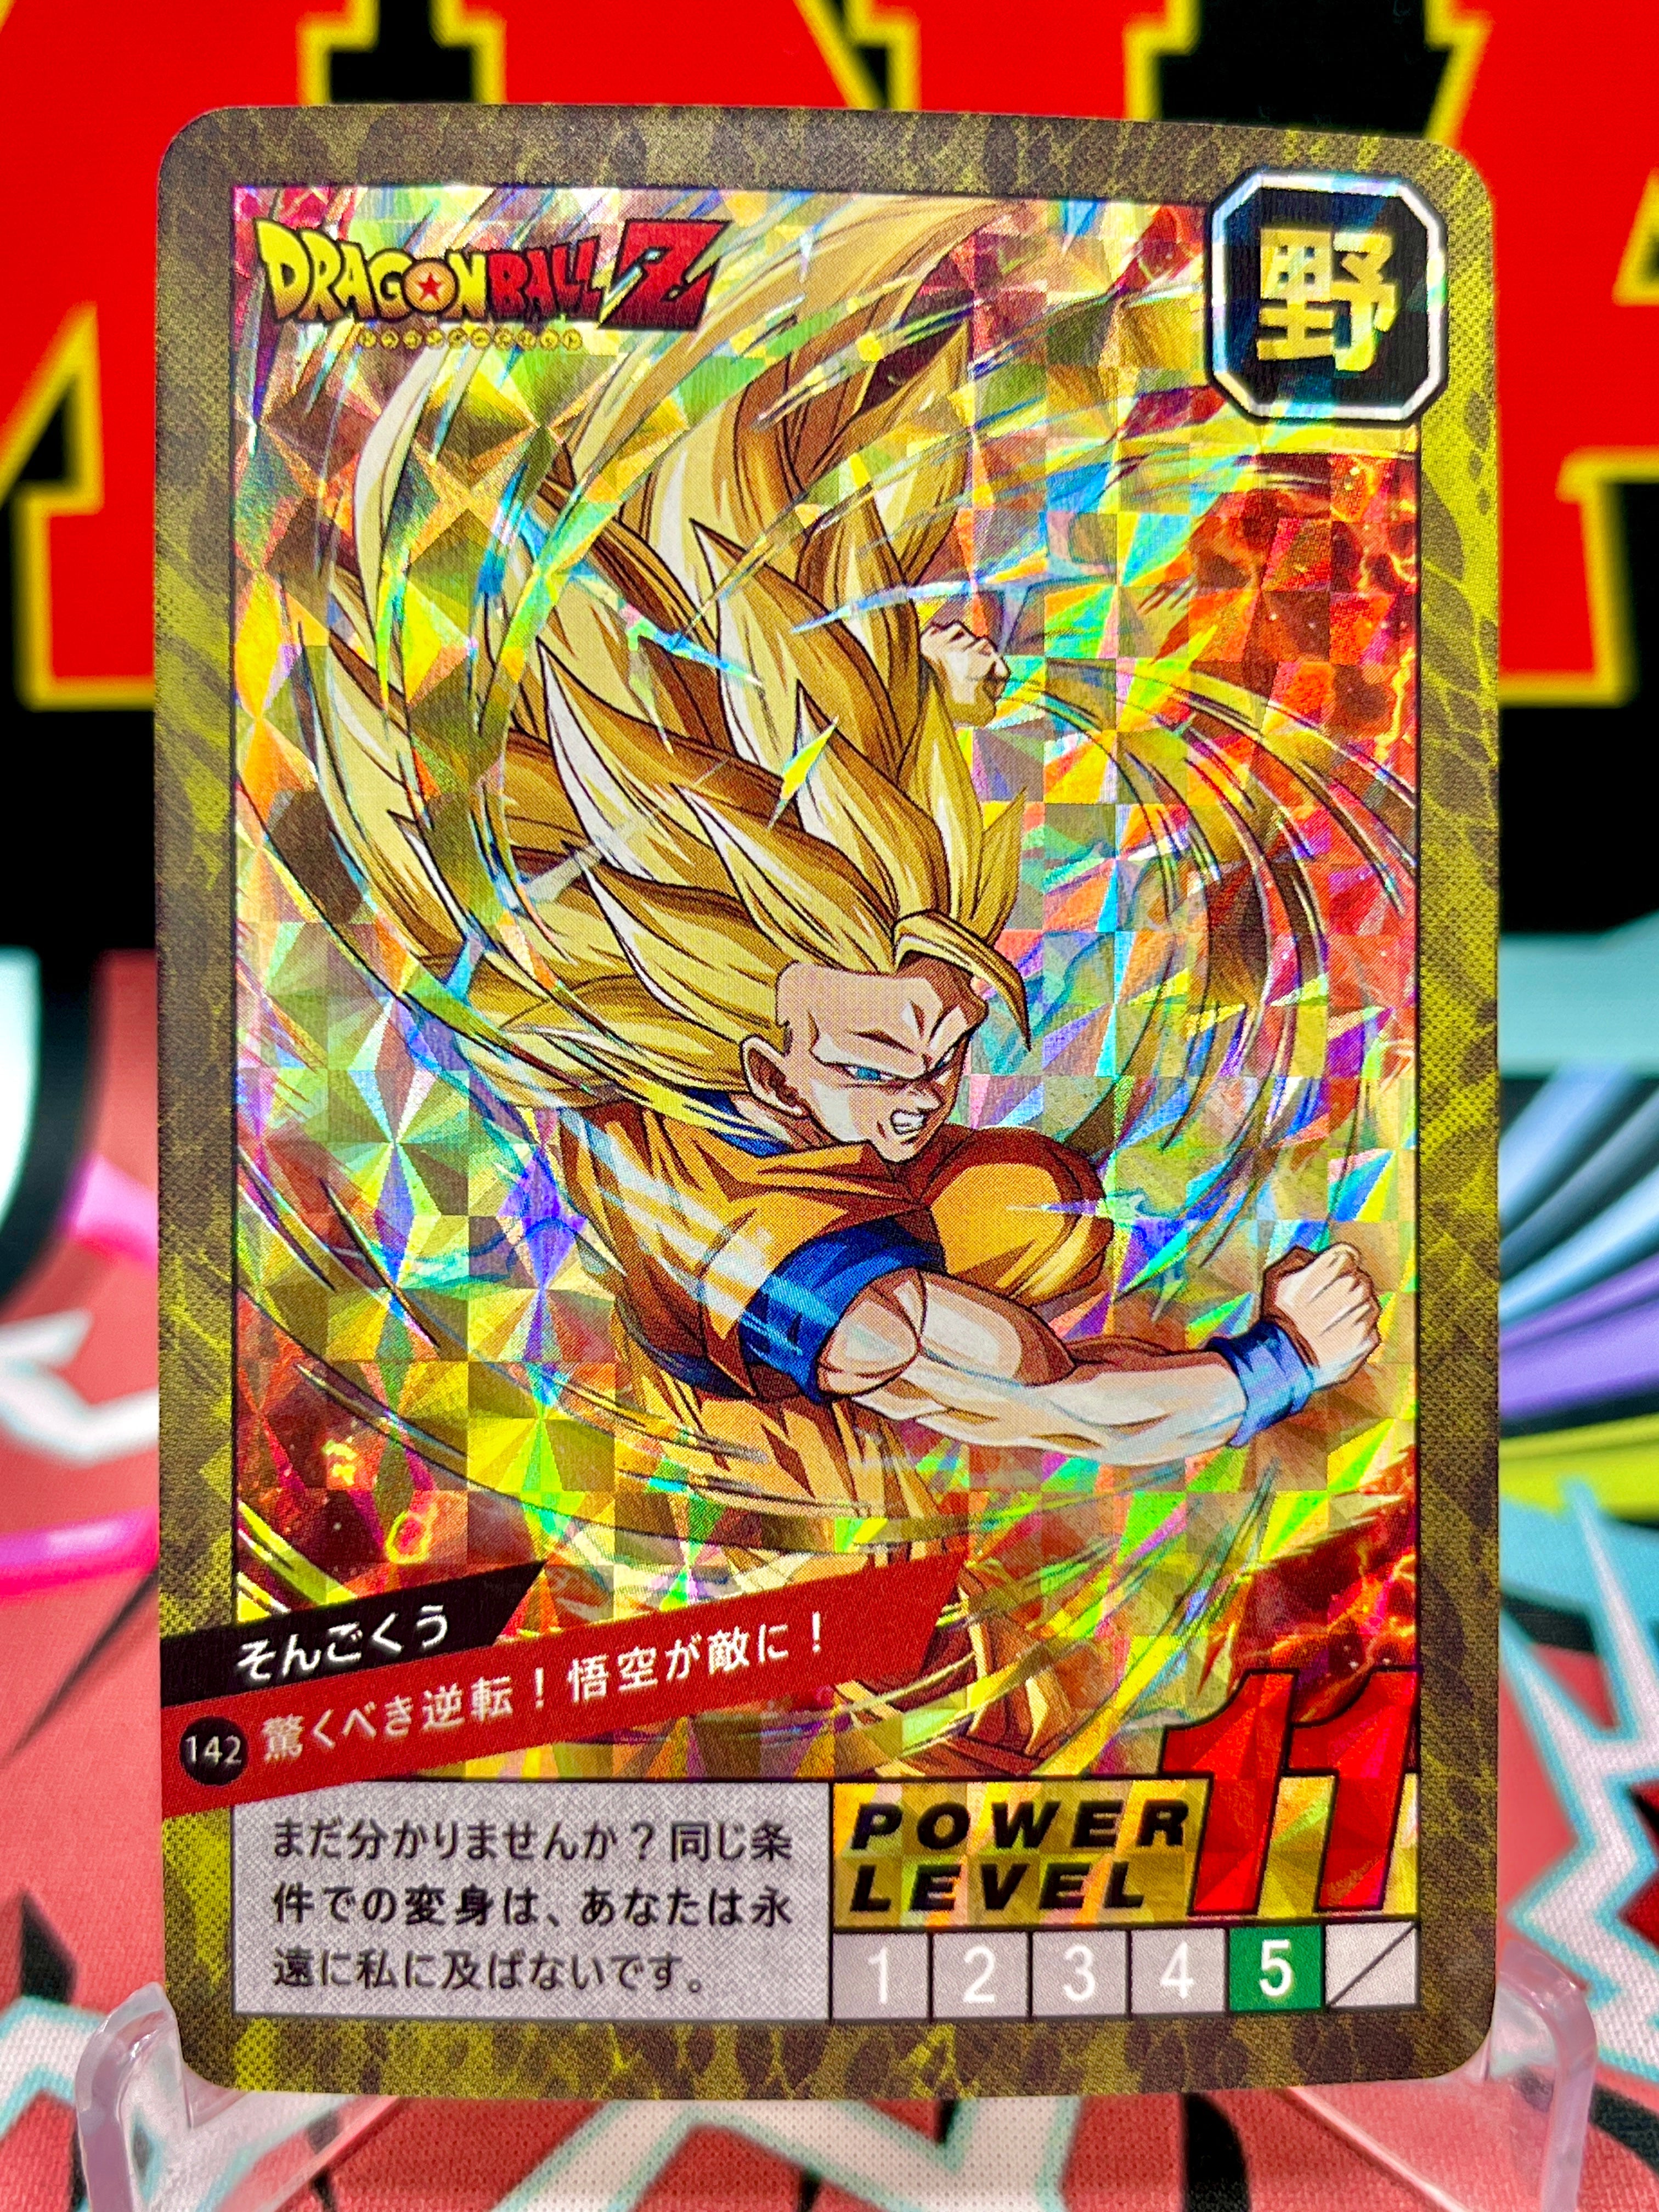 DBCA4-142 Son Goku Art Card